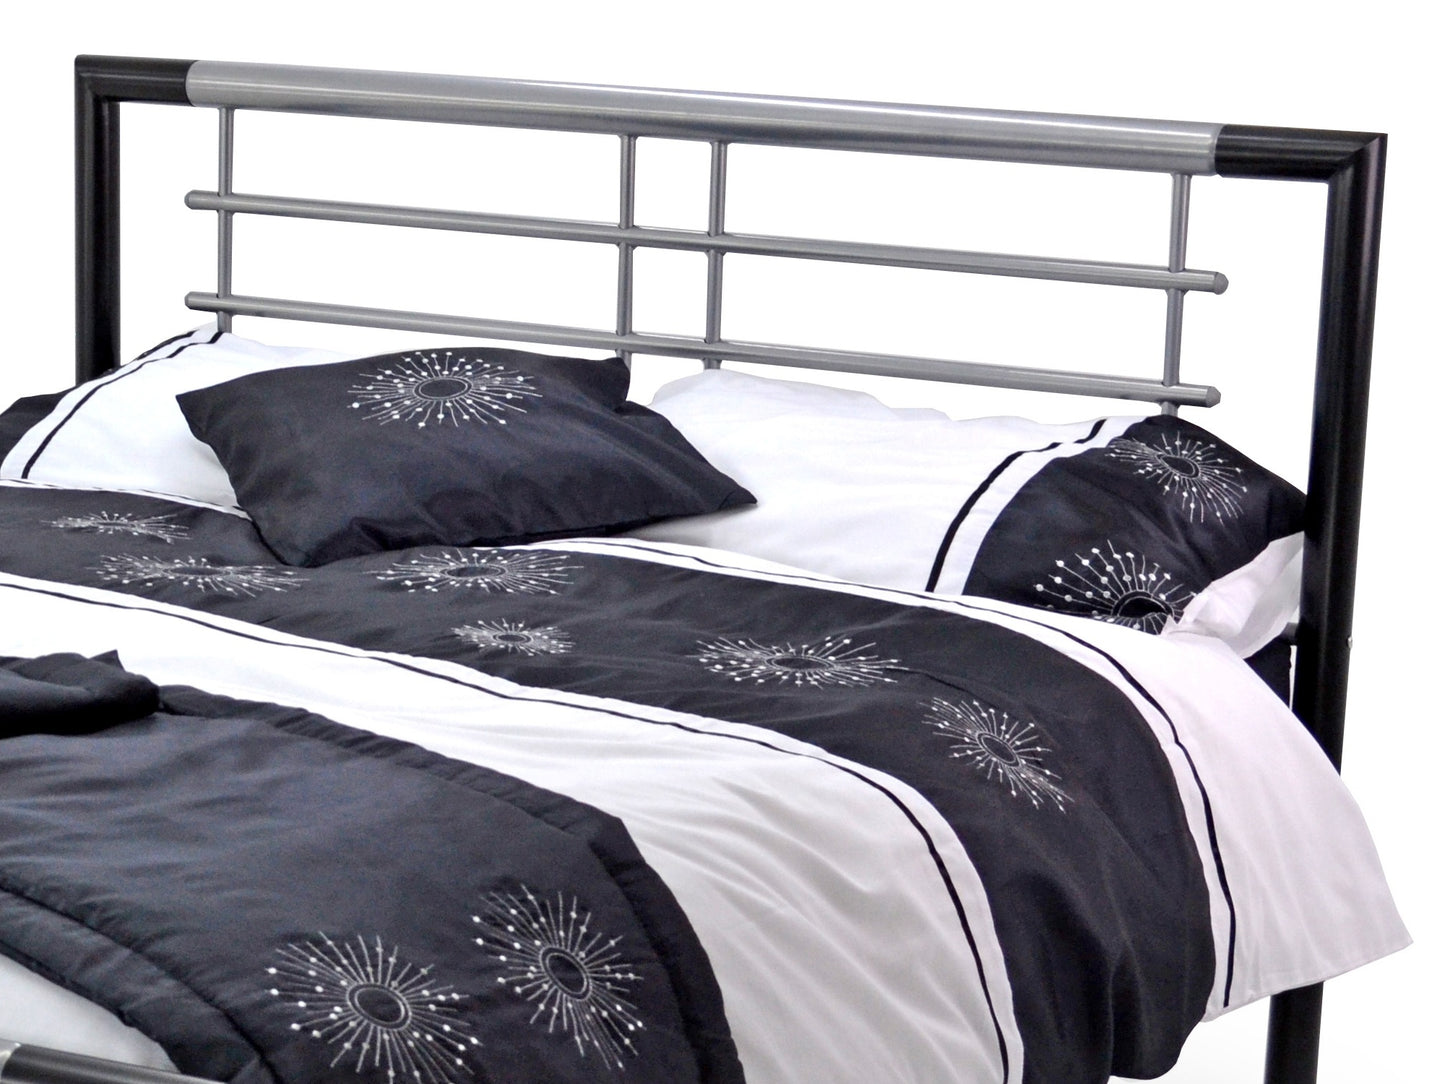 Atlas Luxury Metal Bed Frame in Black and Silver